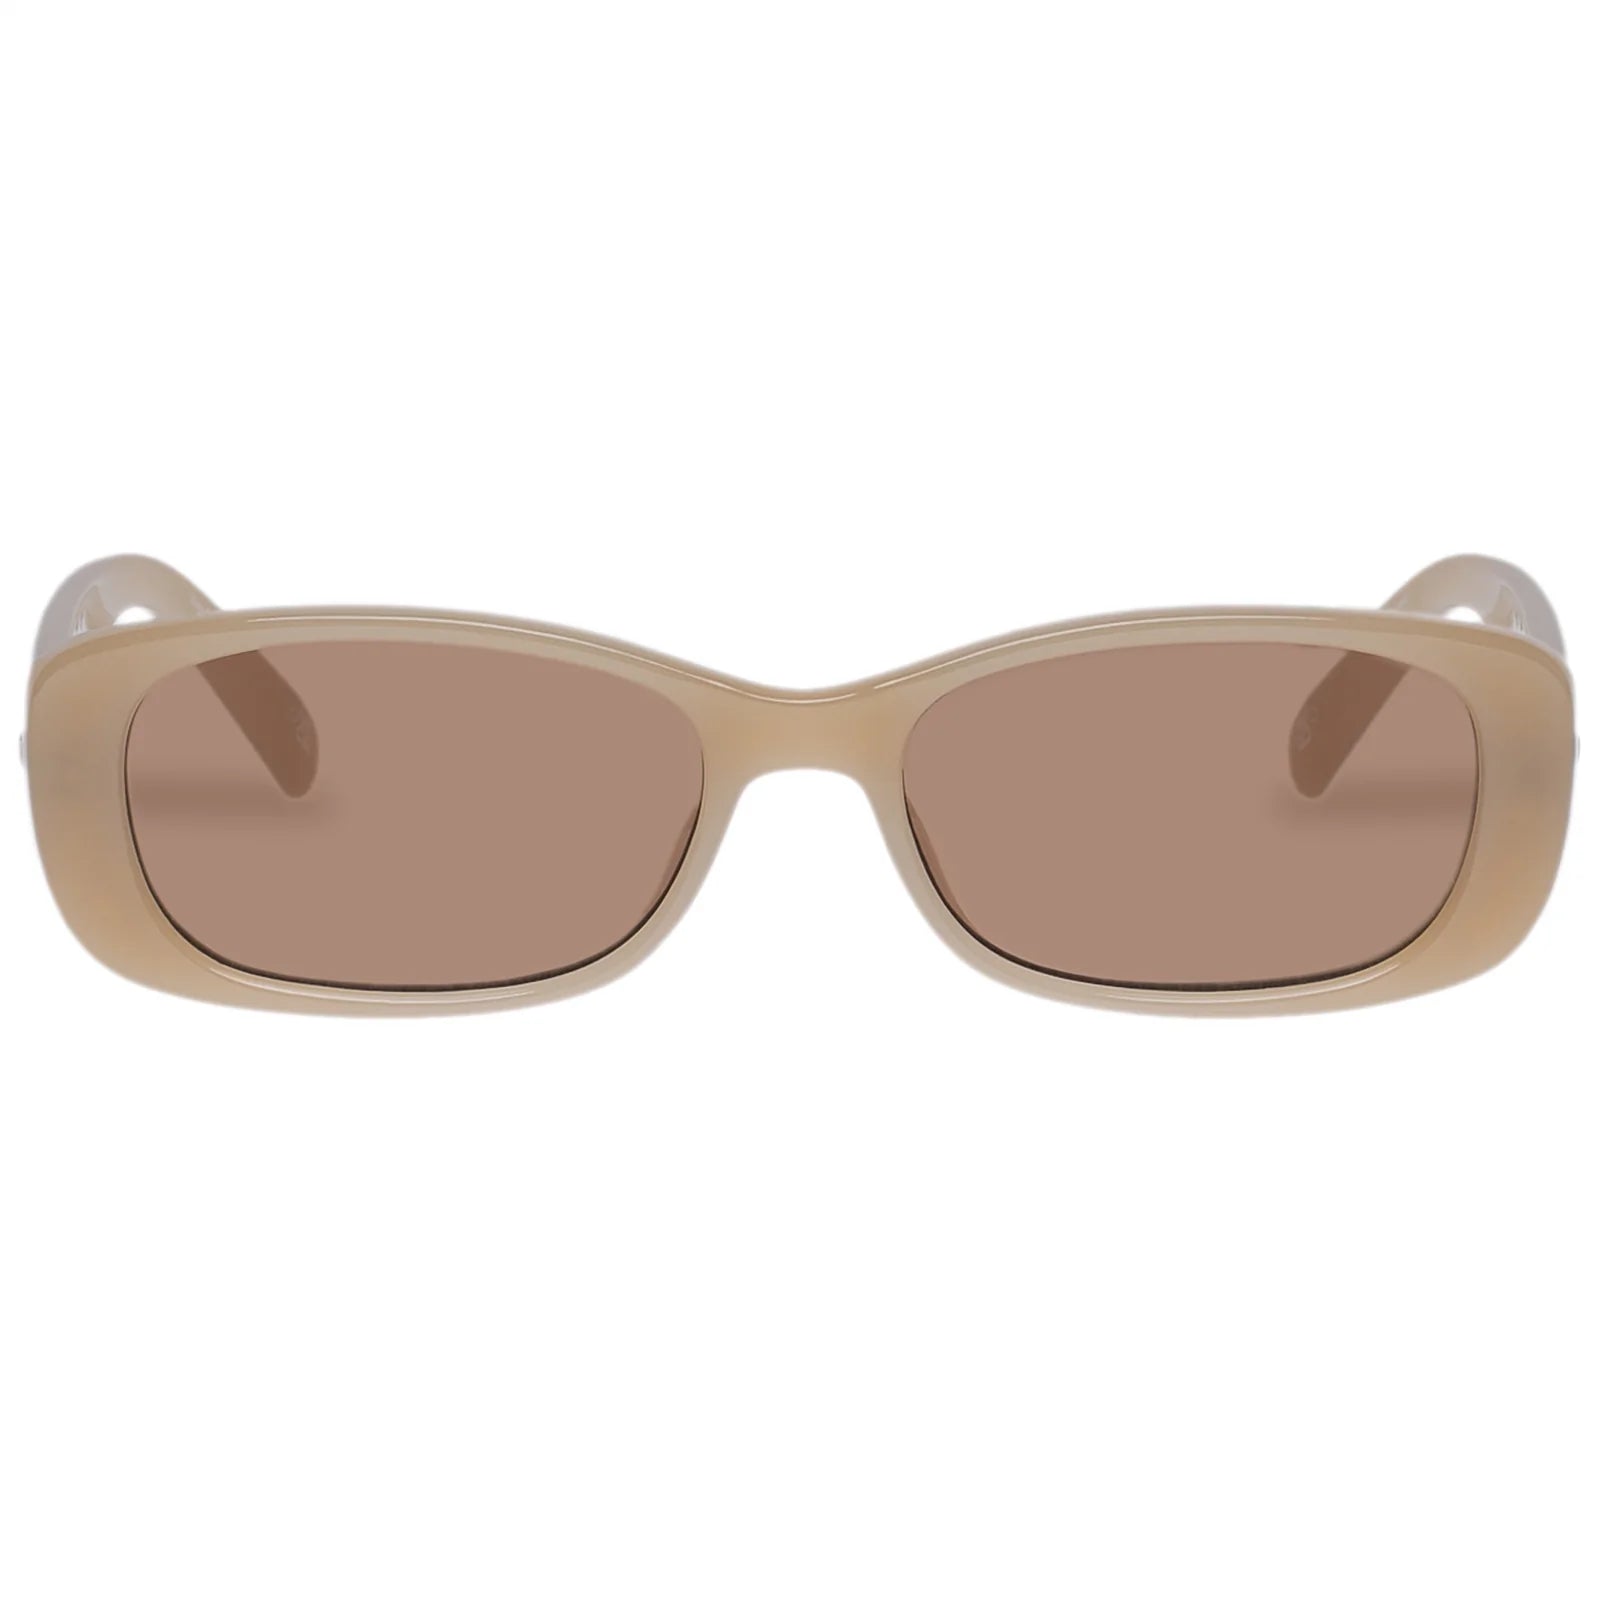 Le Specs Sunglasses Unreal - Latte